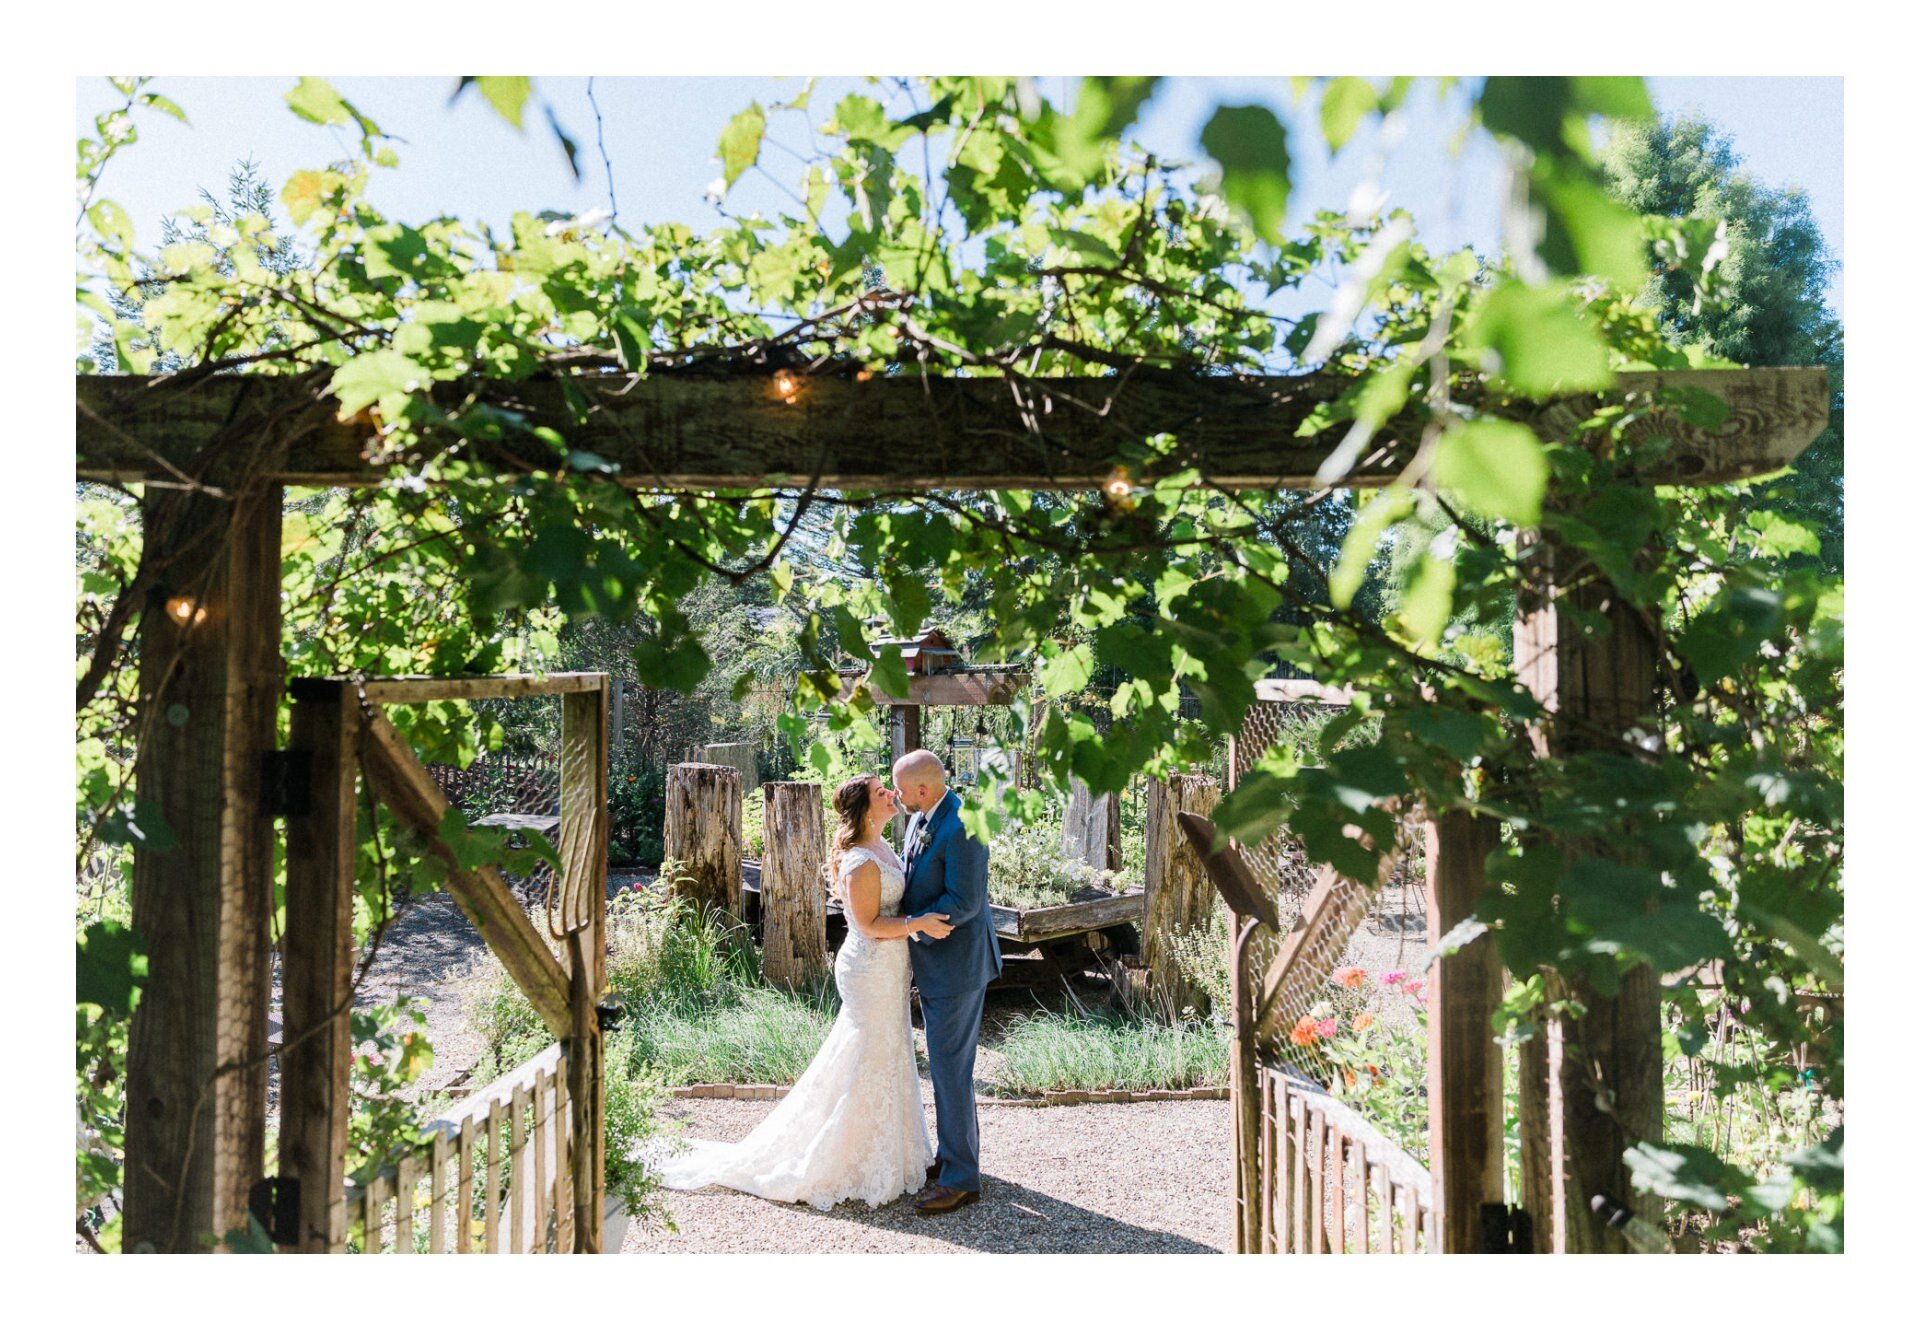 ThornCreek Winery and Garden Wedding Photos 1 15.jpg